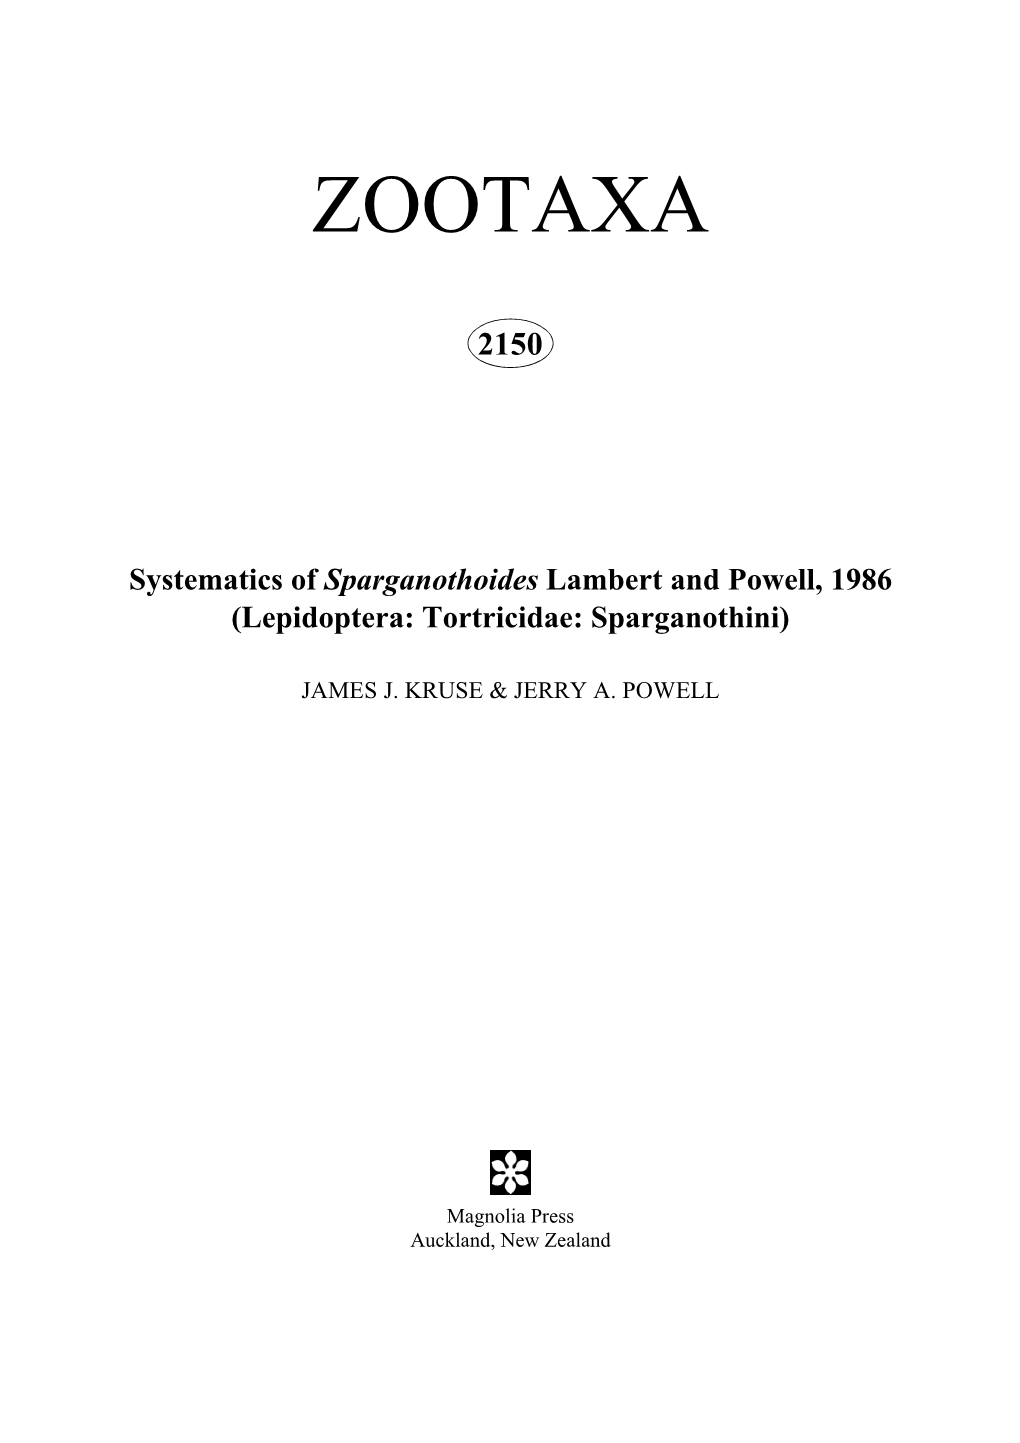 Zootaxa, Systematics of Sparganothoides Lambert and Powell, 1986